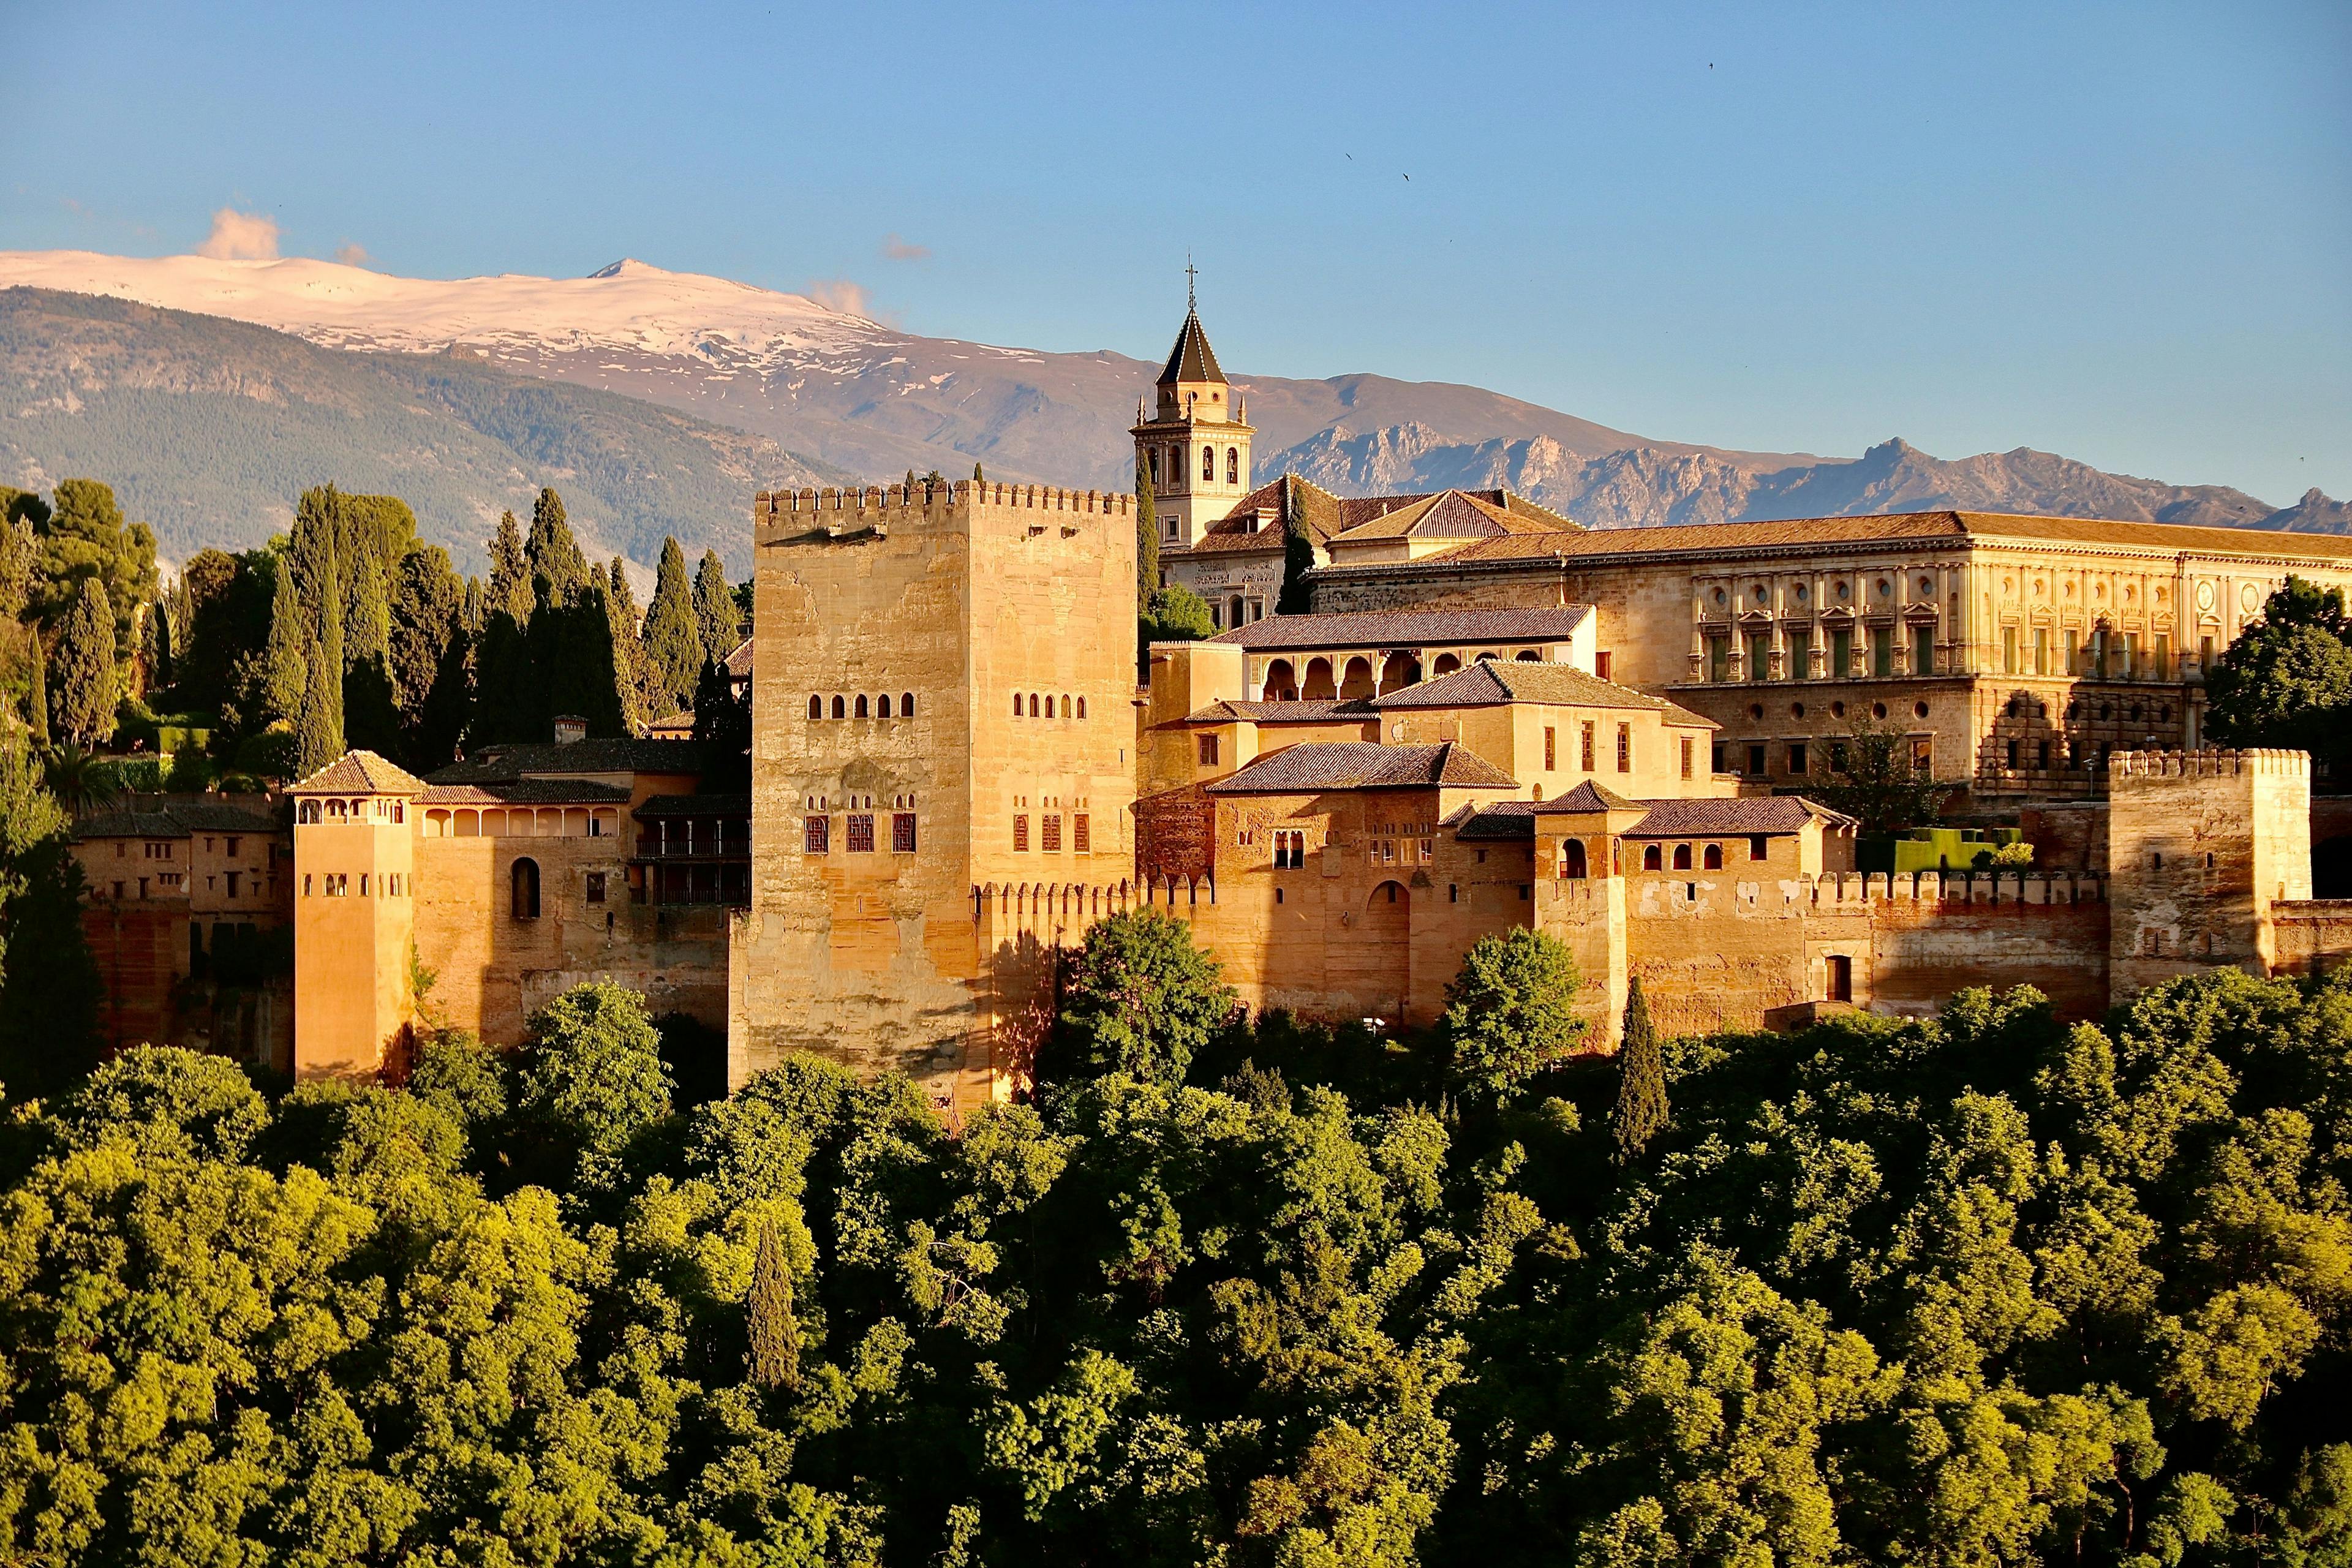 Alhambra palace in Granada Spain.